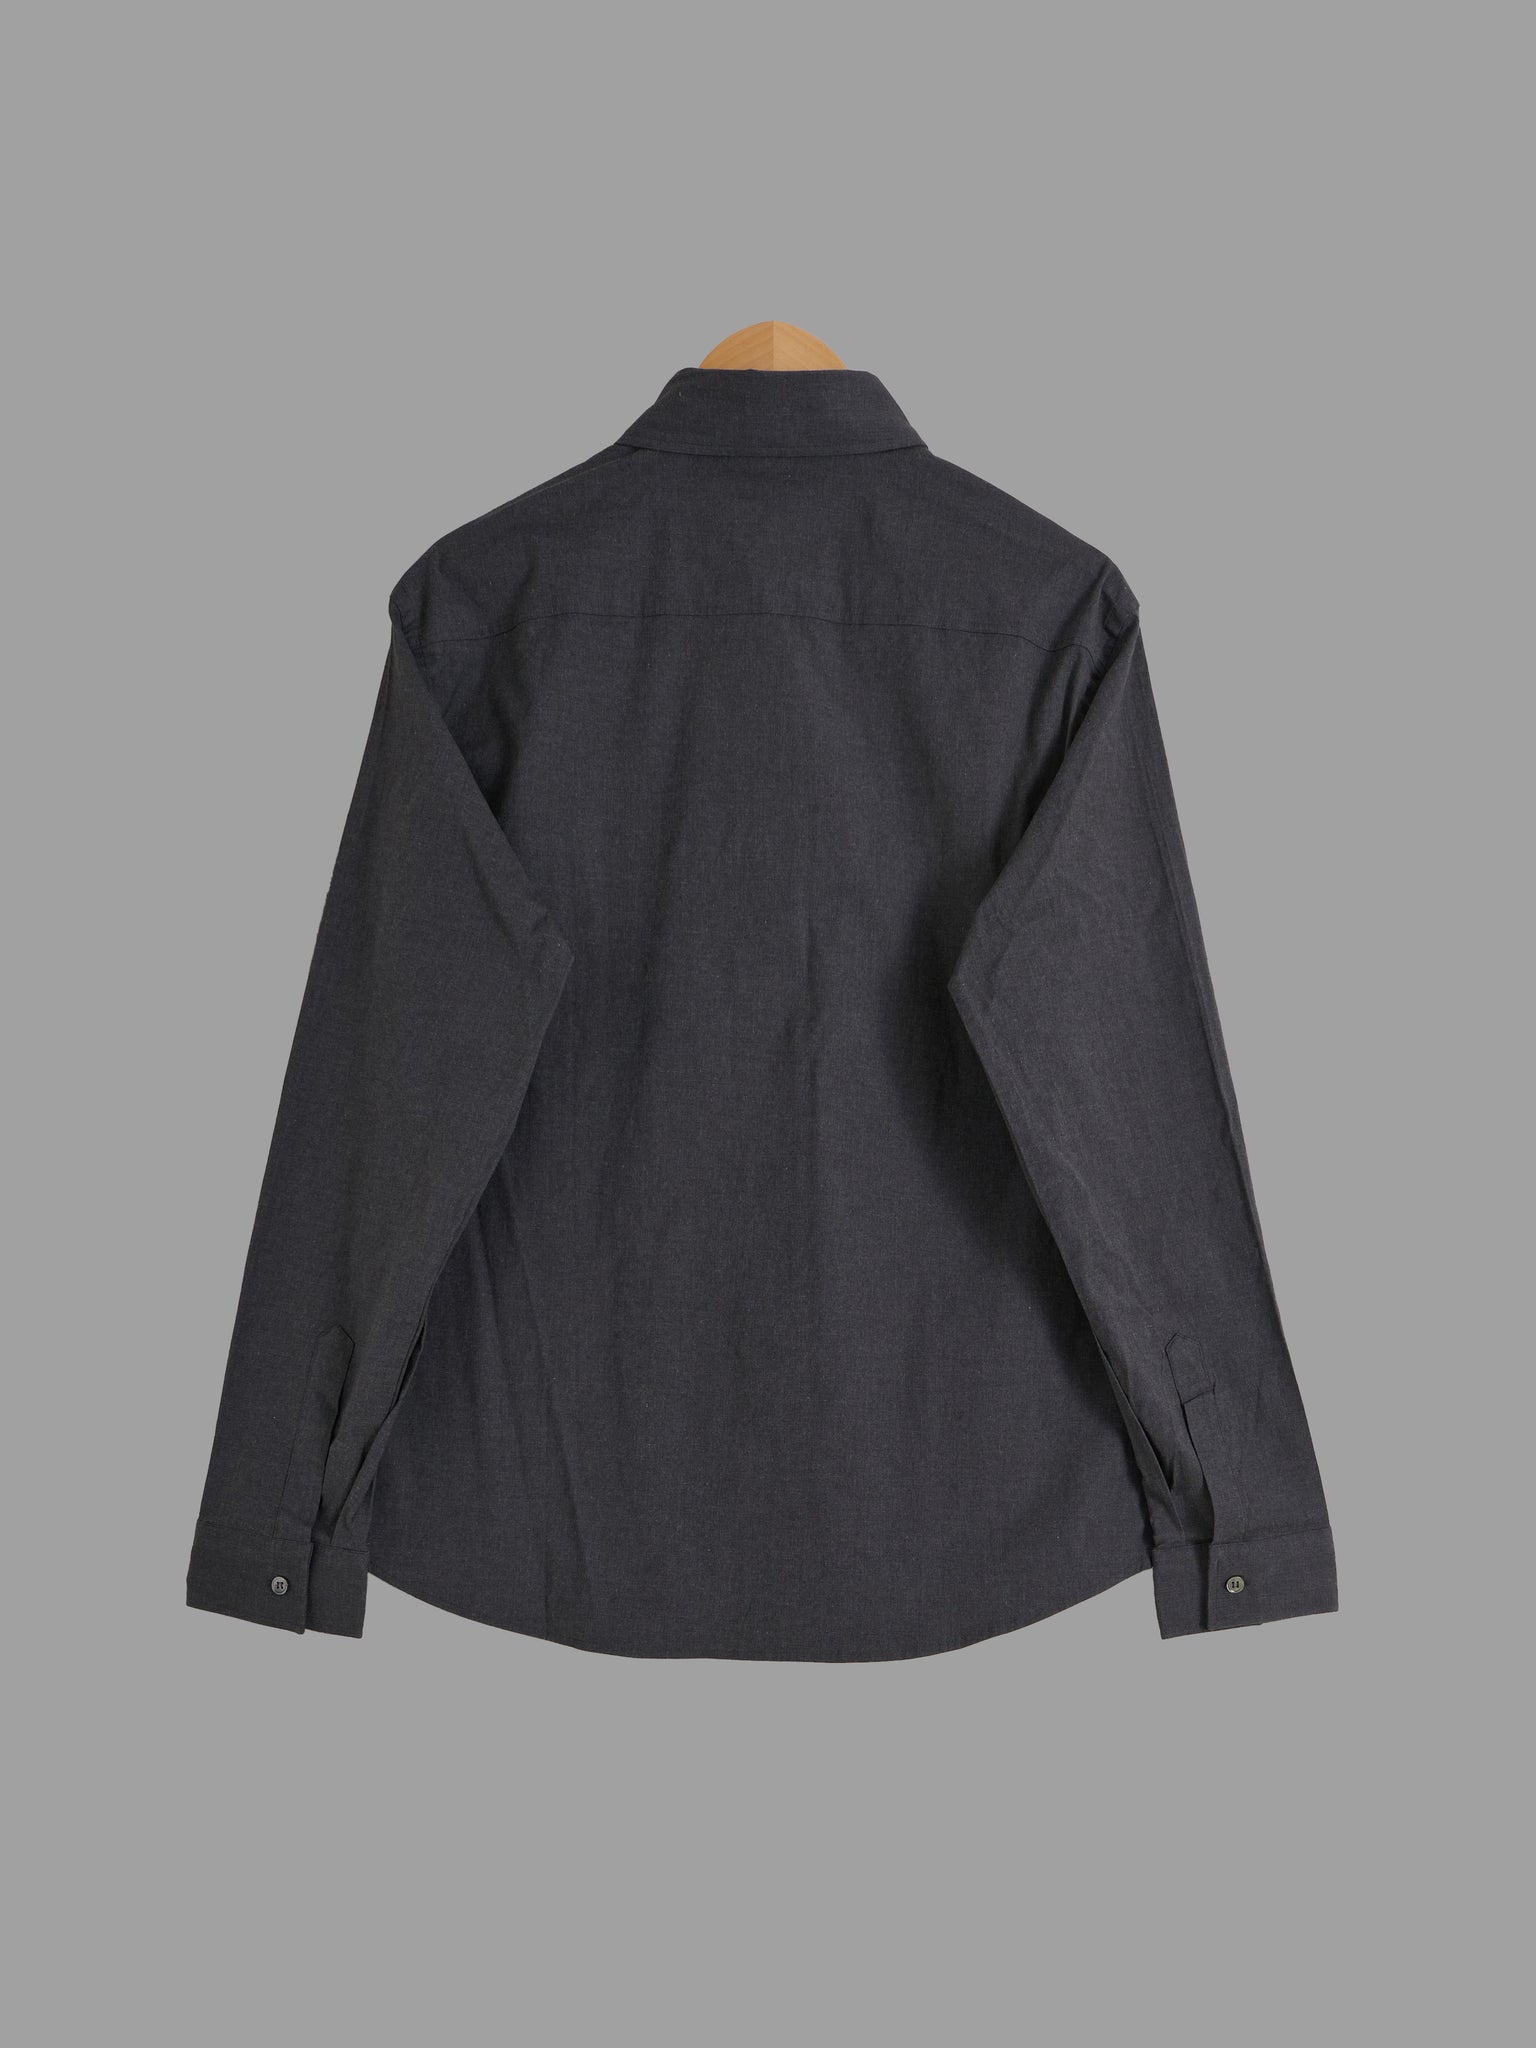 Samsonite dark grey stretch cotton shirt - approx mens size M - L